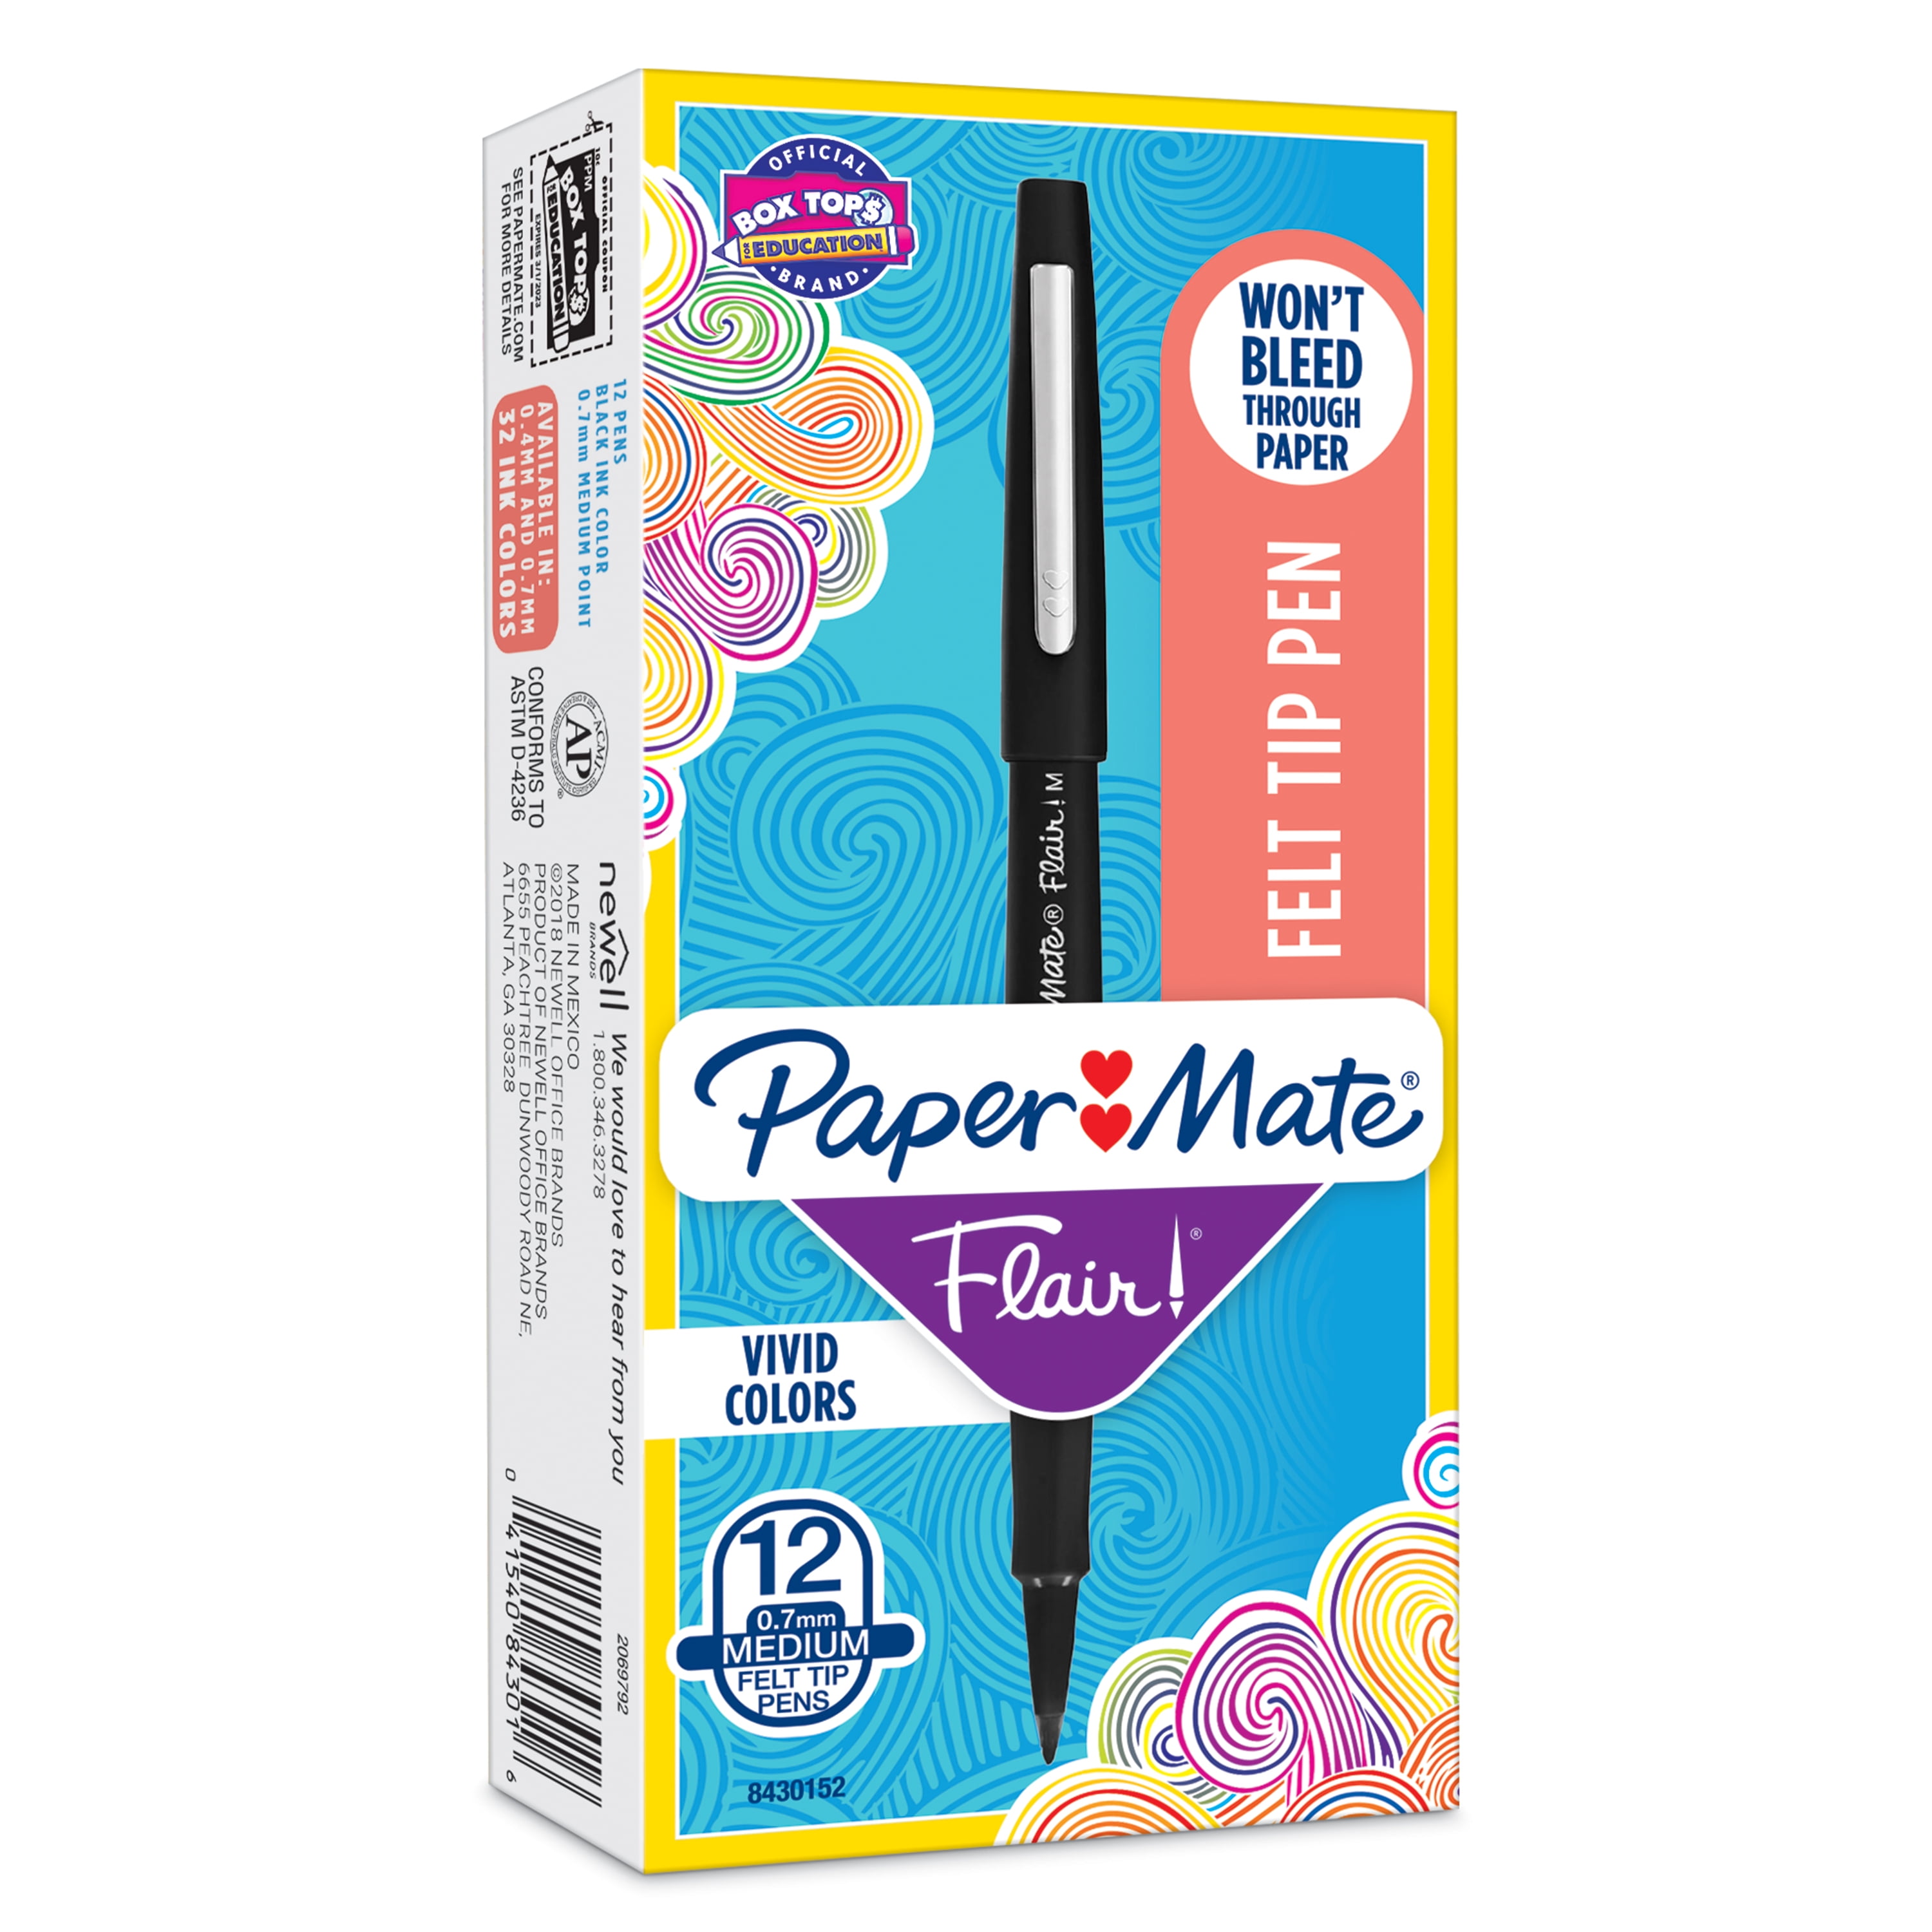 Paper Mate Flair Felt Medium Point Pens - Black, 4 ct - Harris Teeter